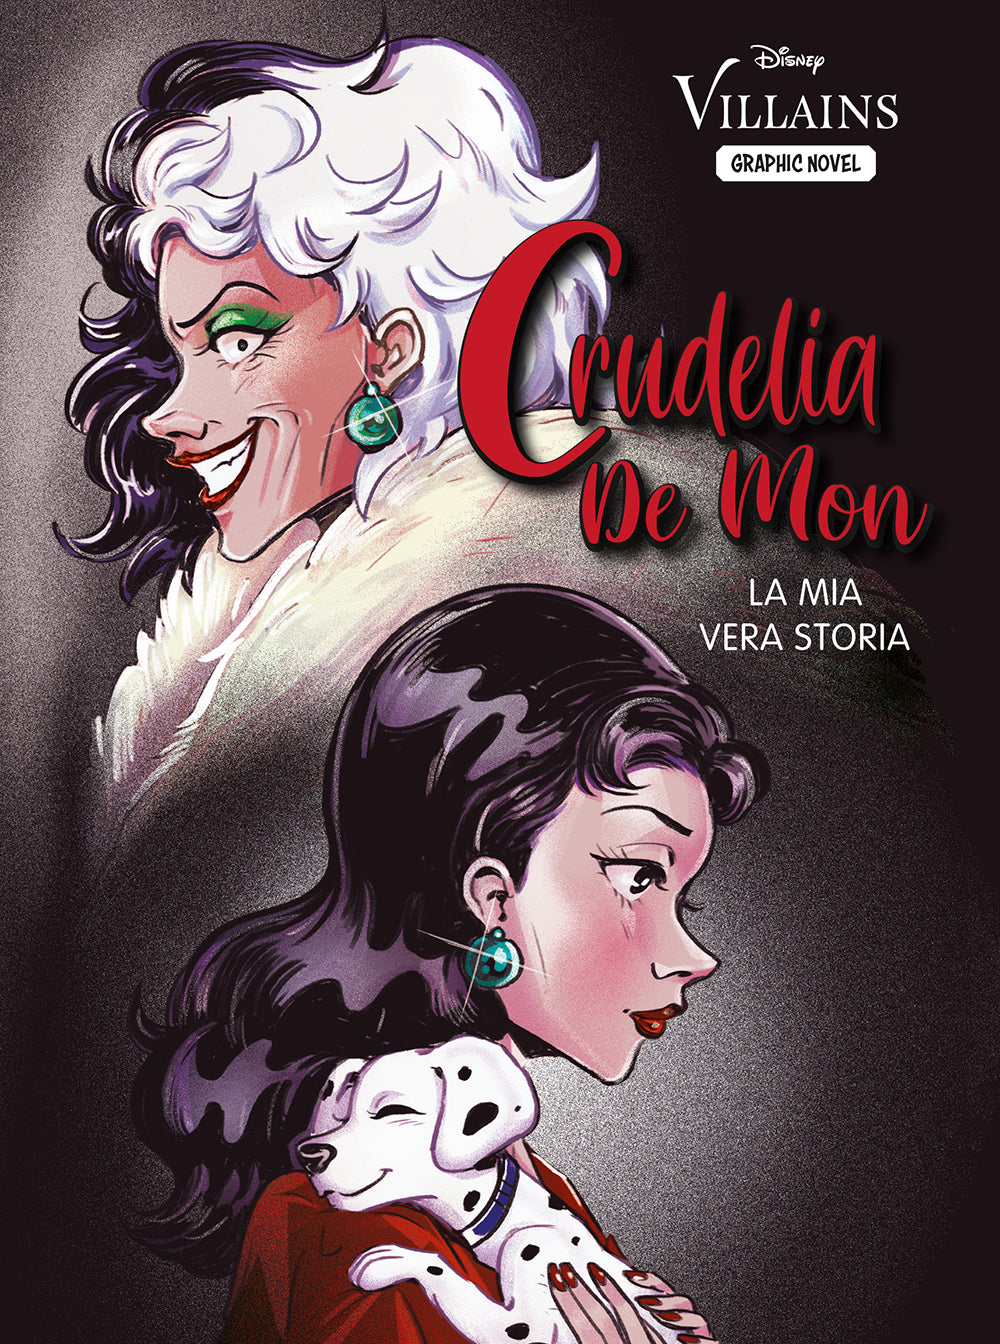 Crudelia De Mon La mia vera storia - Disney Villains Graphic Novel